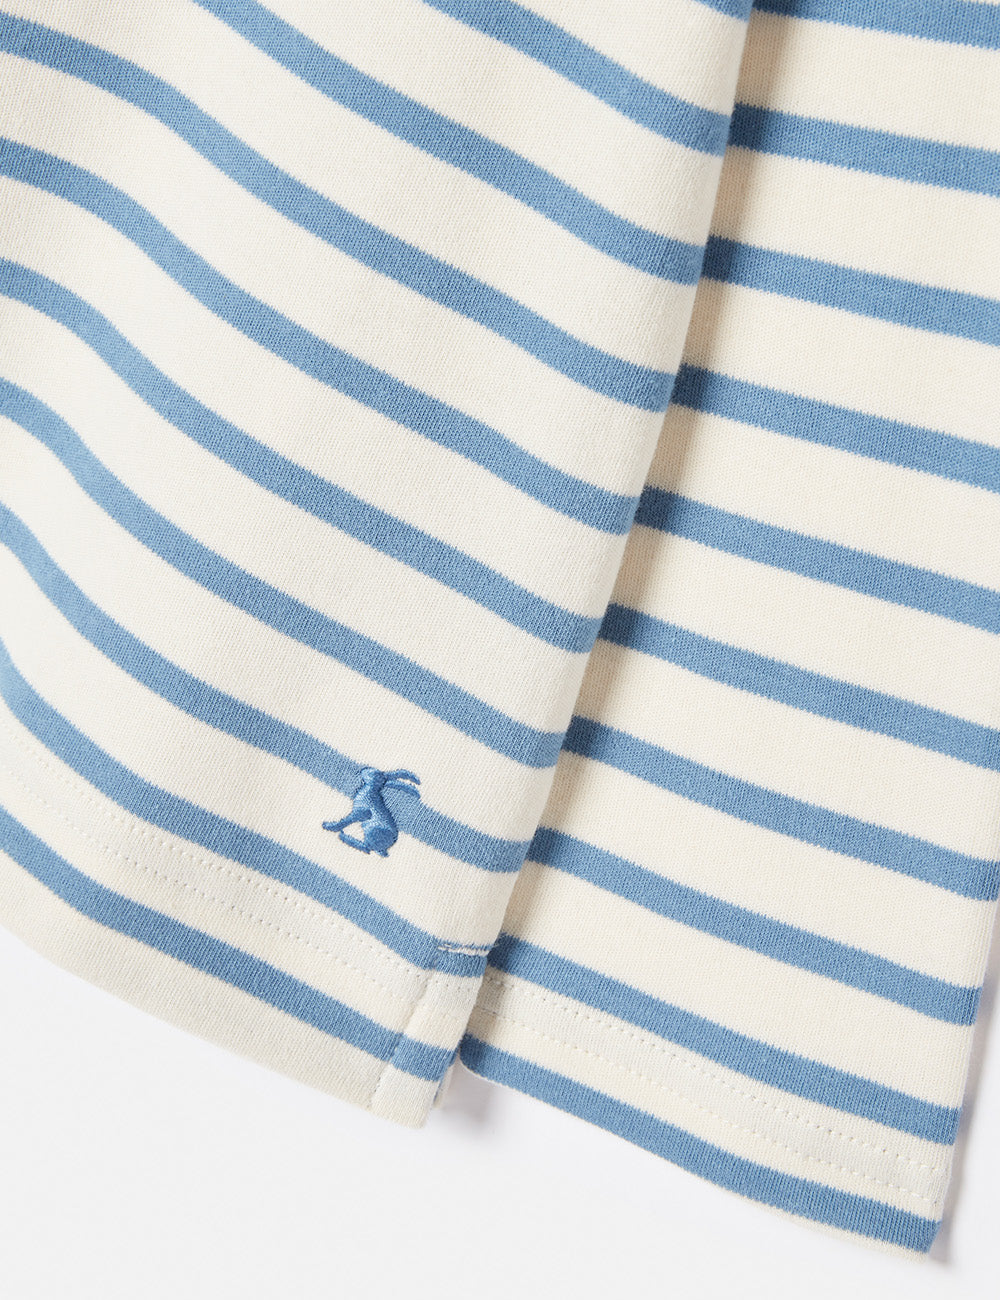 Joules Harbour Long Sleeve T-Shirt - Cream/Blue Stripe